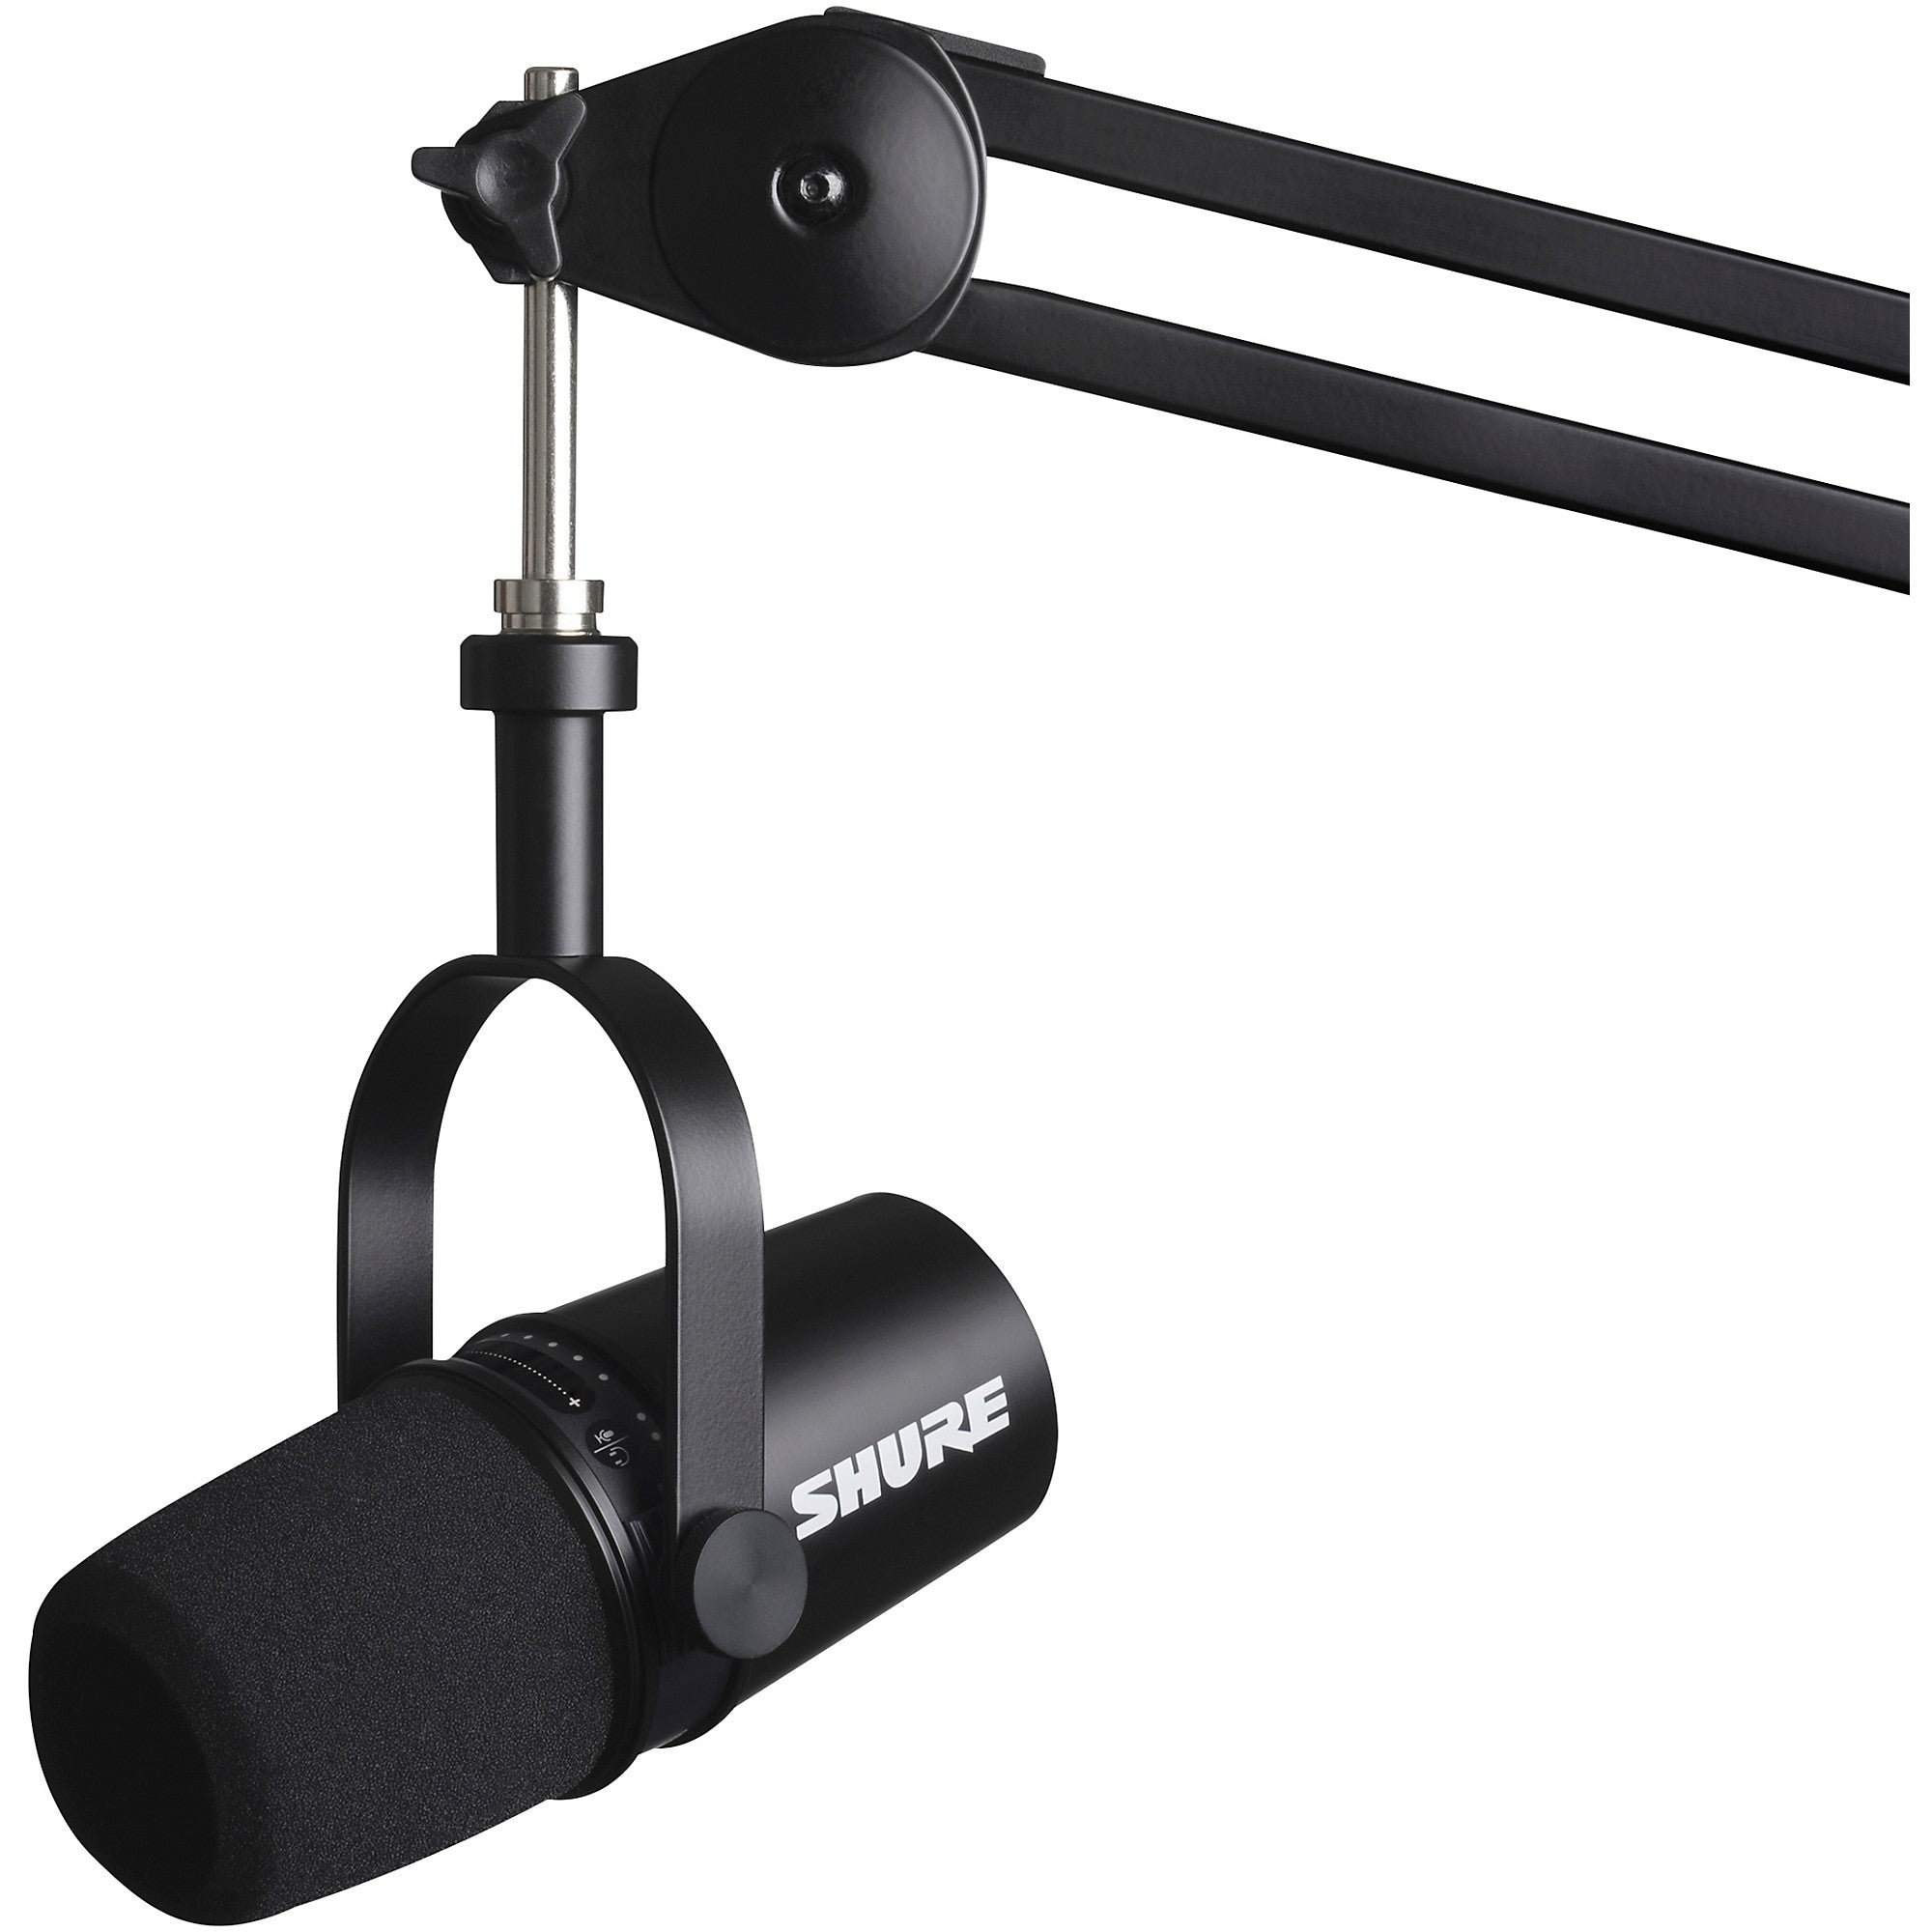 Shure MV7 USB and XLR Dynamic Microphone Black